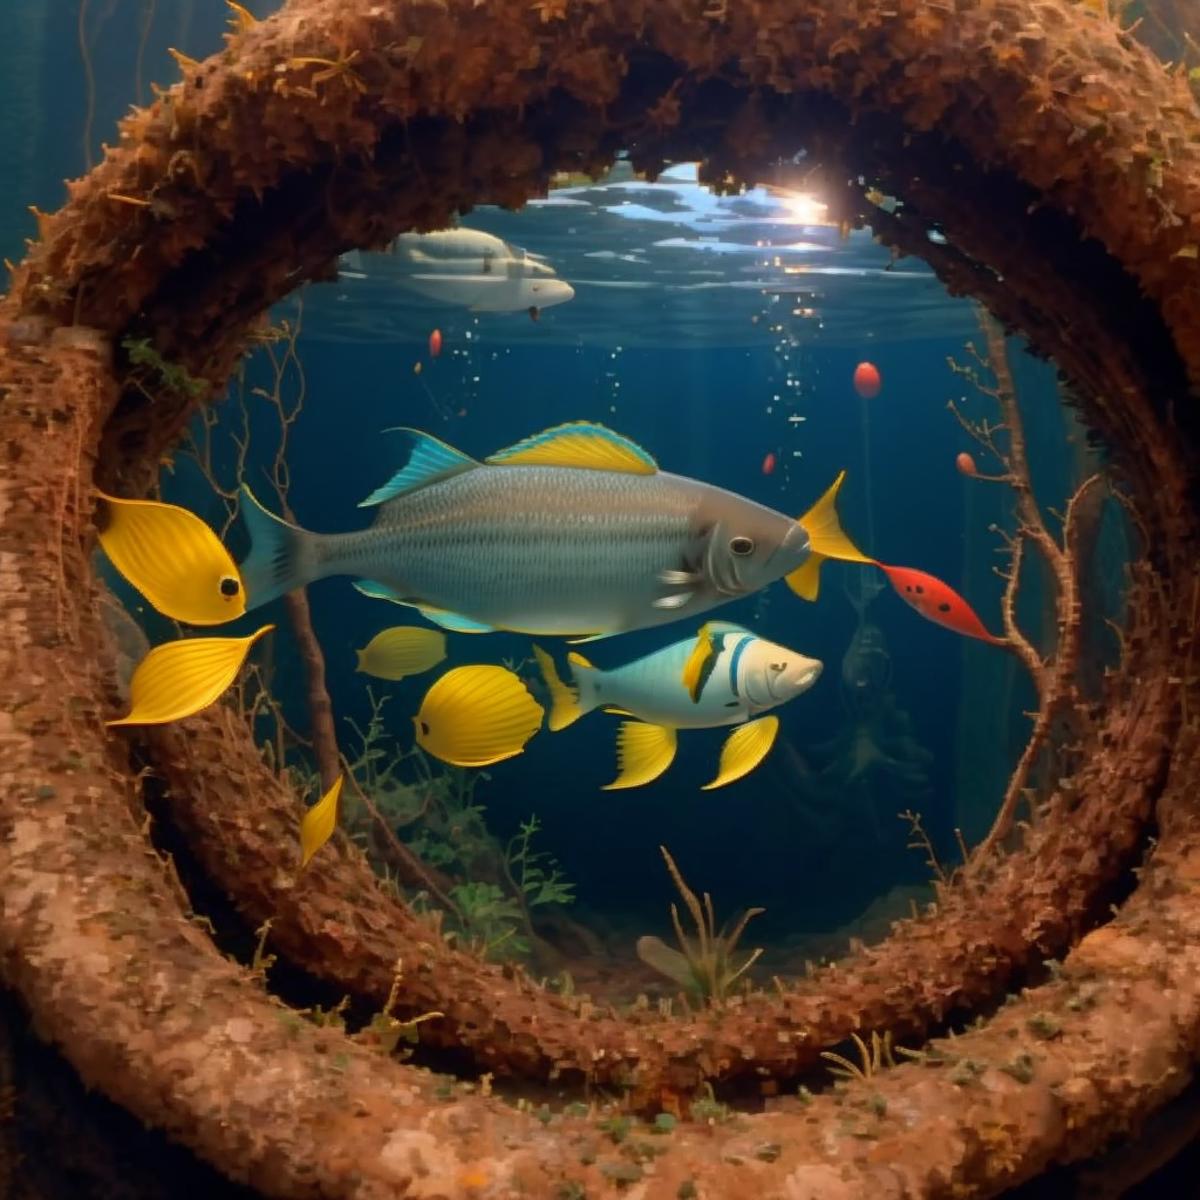 Life Aquatic image by OldSkool